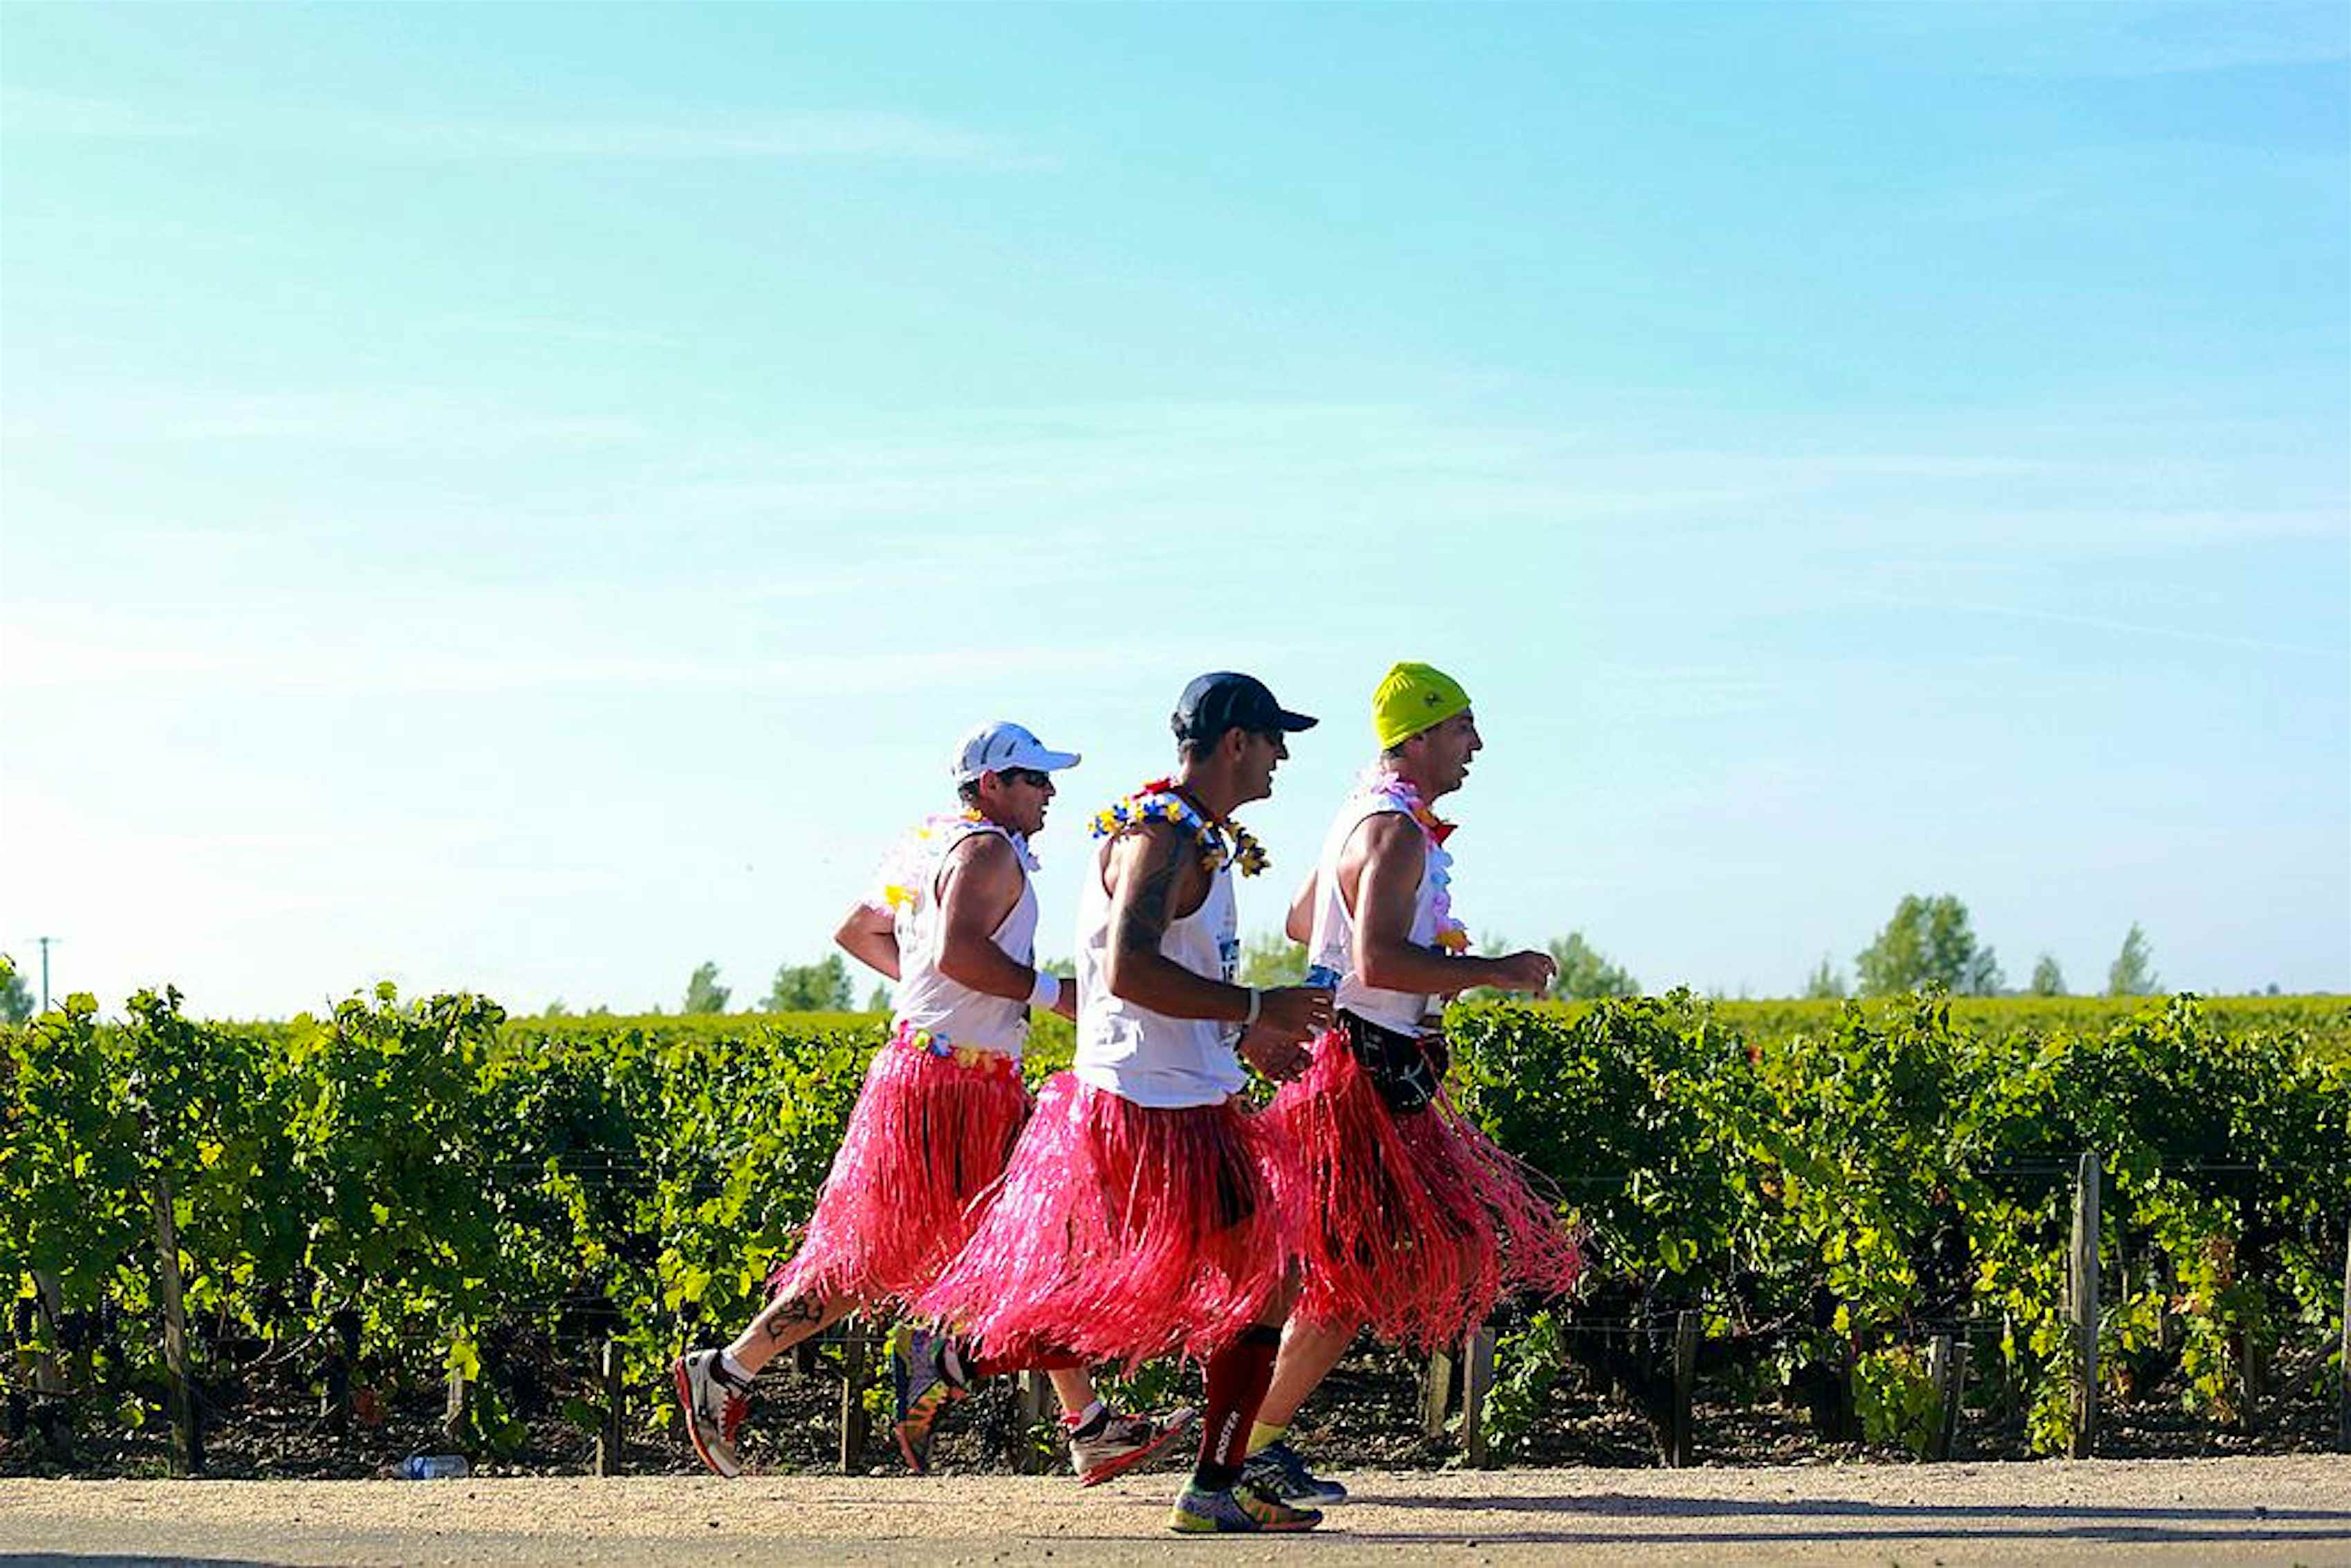 France’s famous wine marathon is open for registration